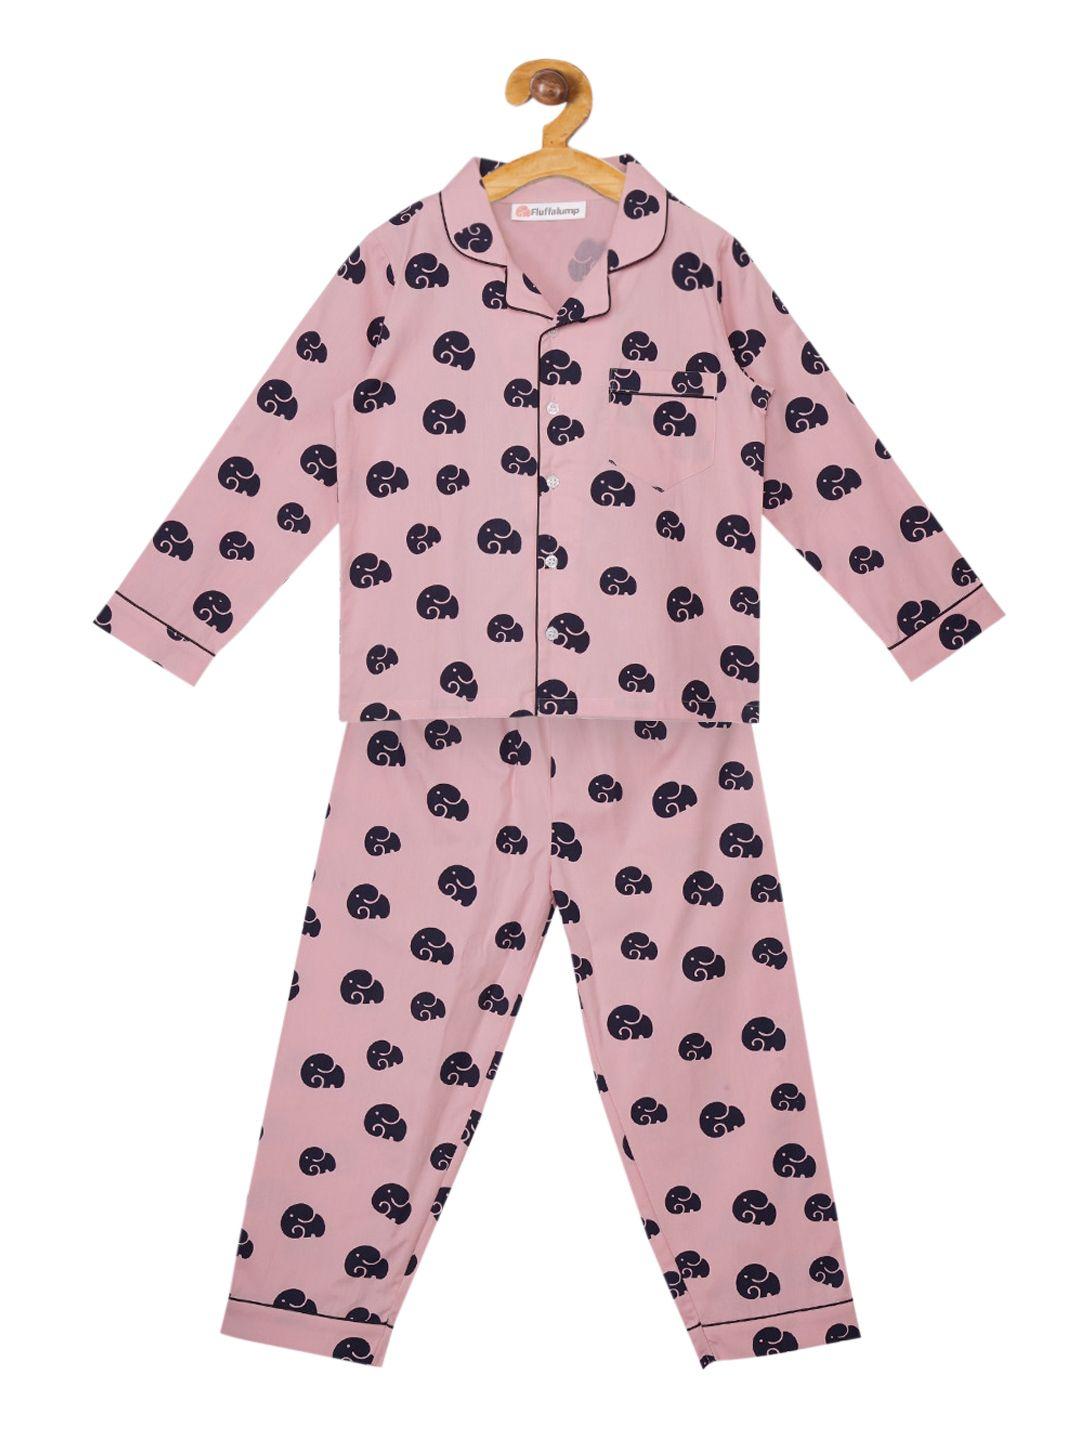 fluffalump unisex kids pink & black printed night suit